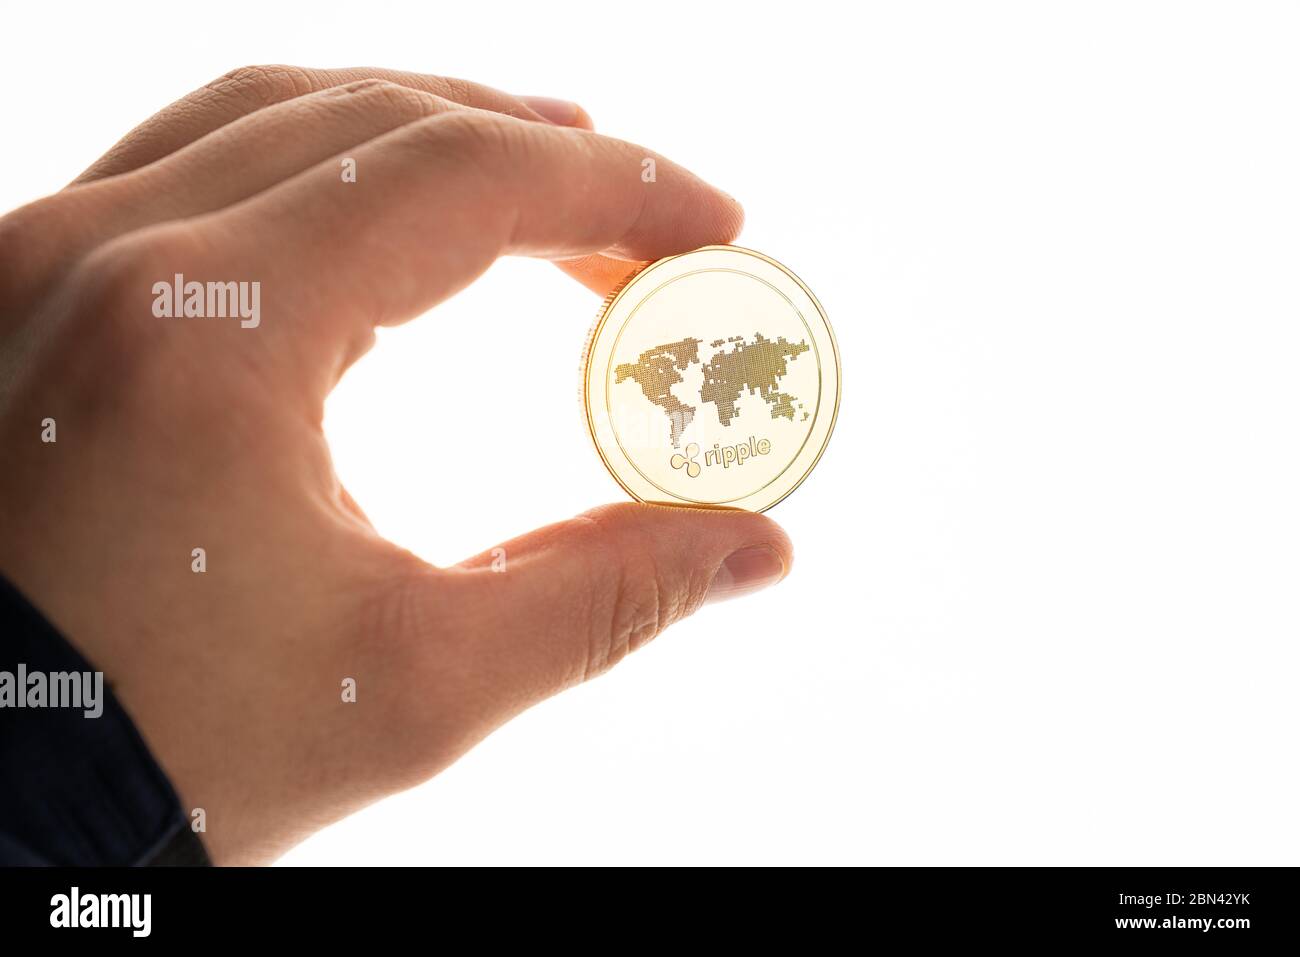 La mano maschio tiene la moneta ondulata dorata isolata su sfondo bianco Foto Stock